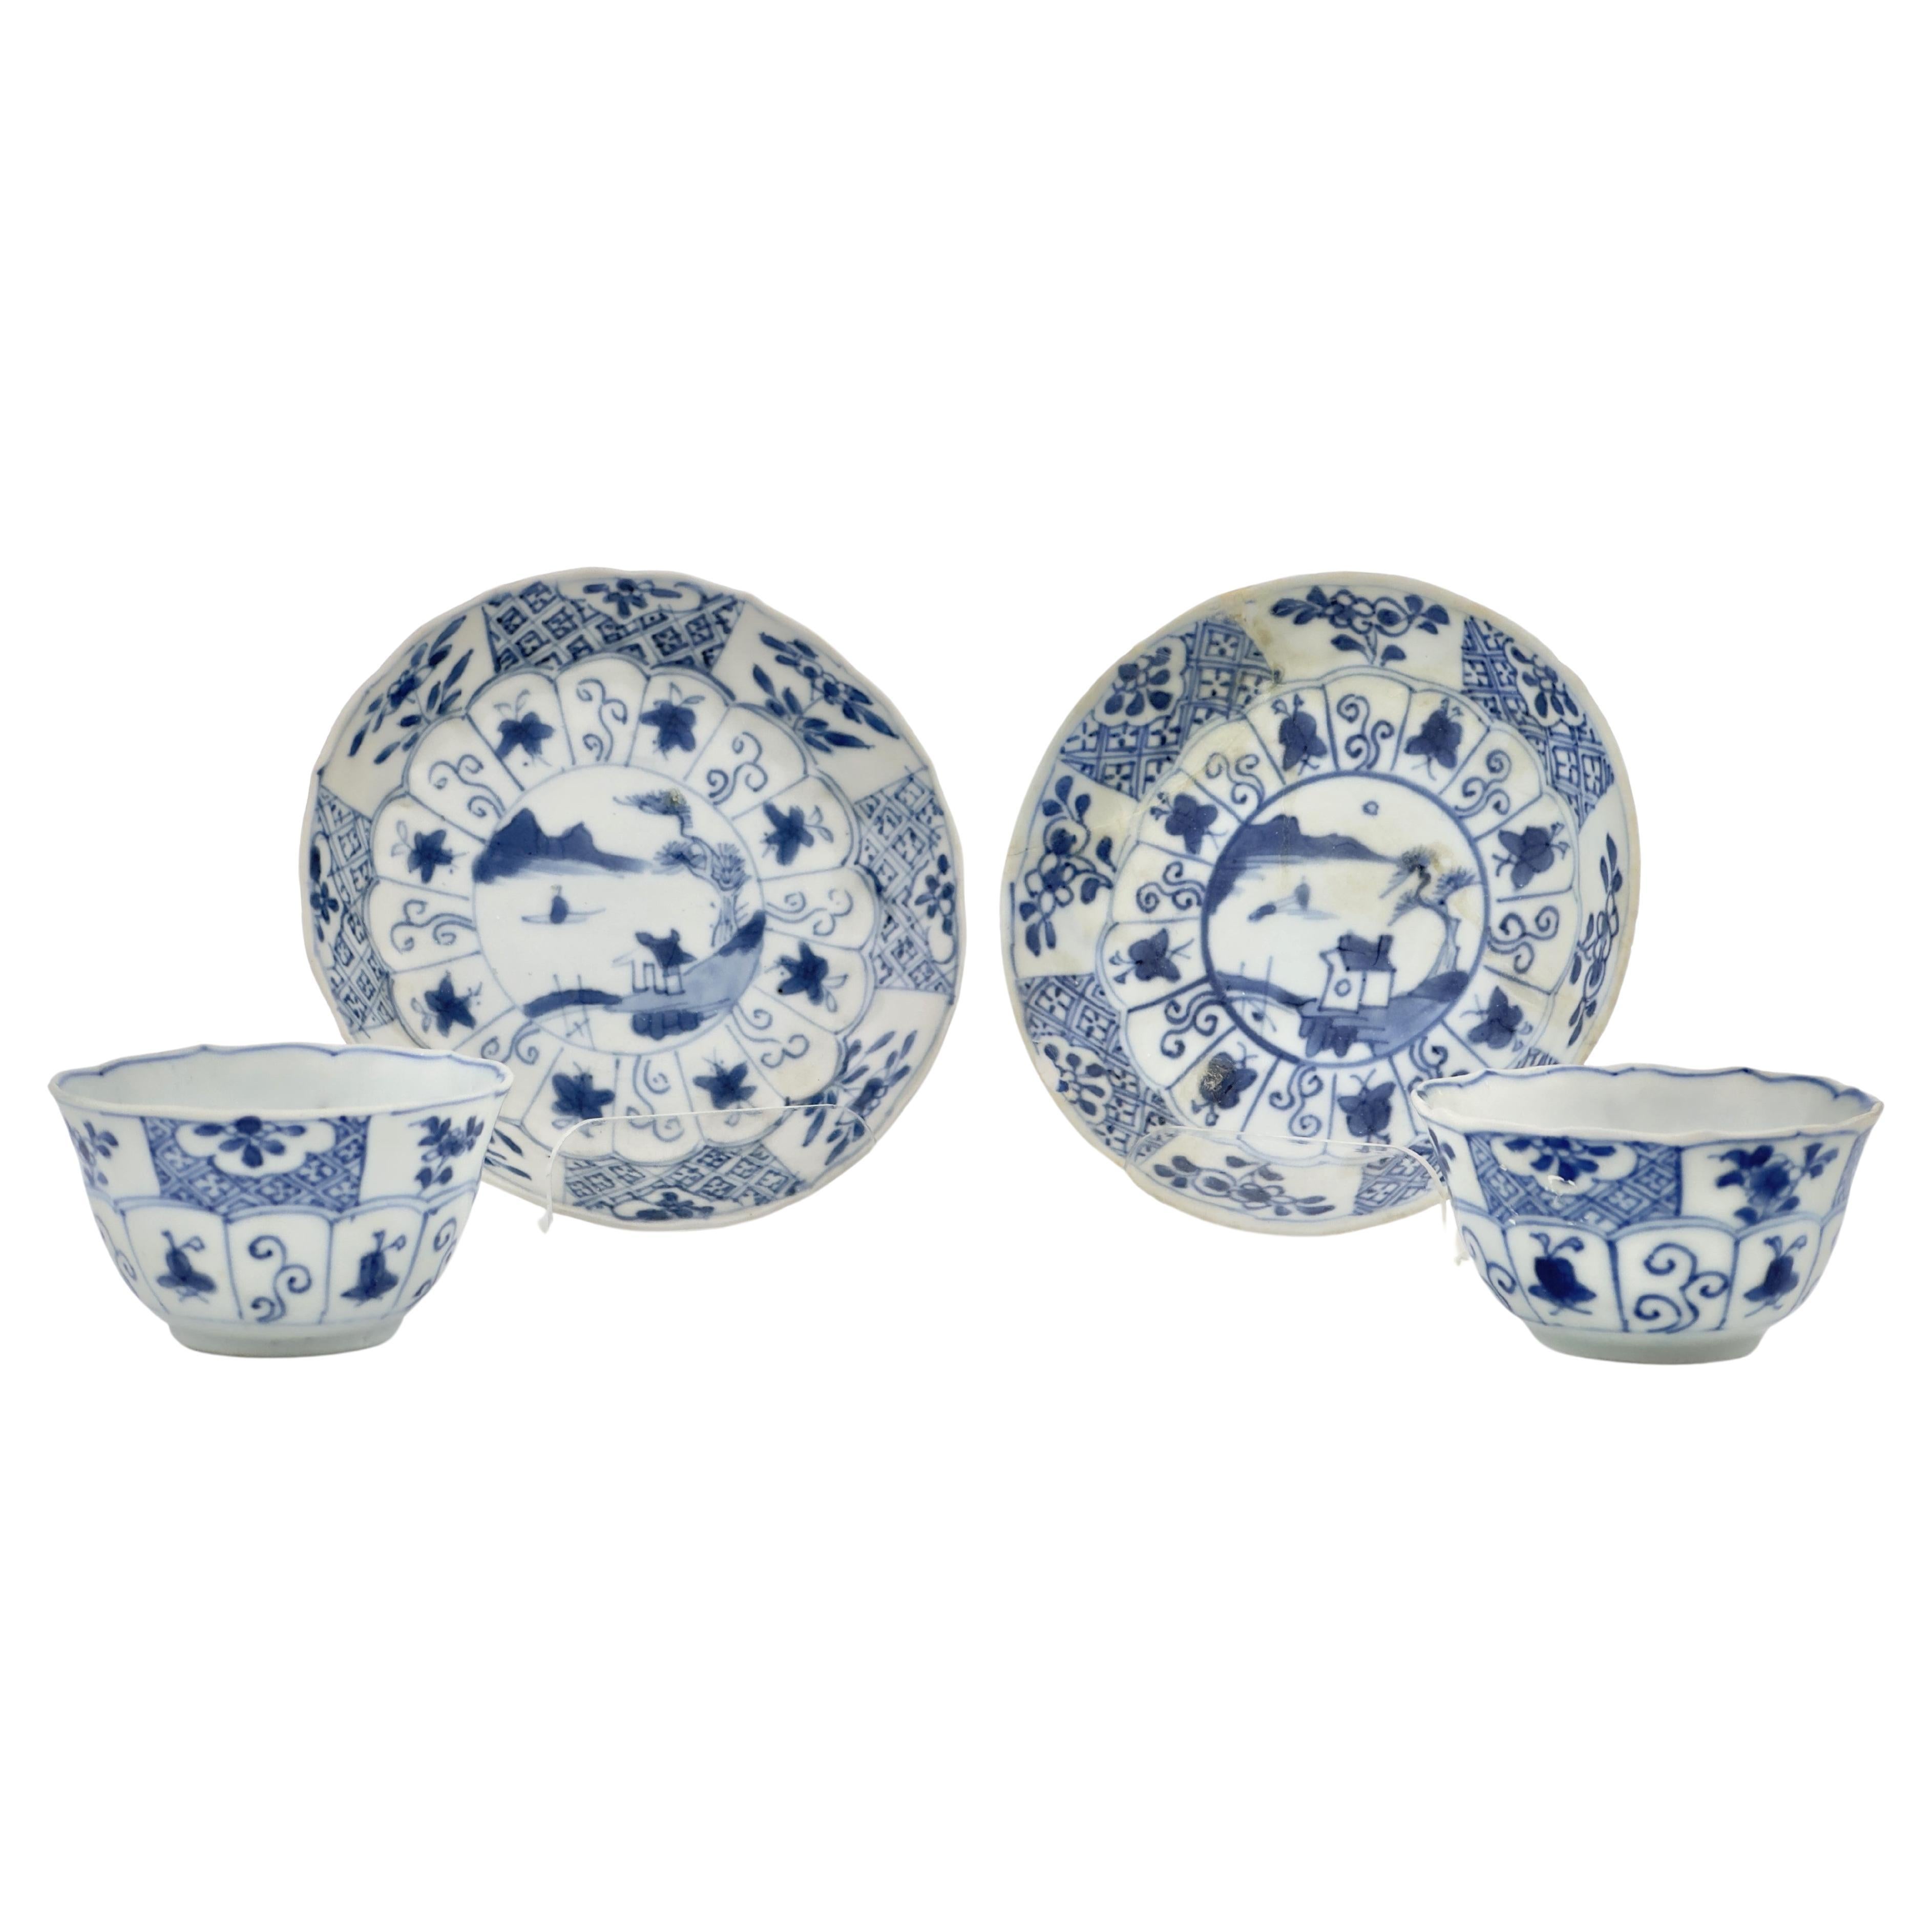 Blau-weißes Teeservice um 1725, Qing Dynastie, Herrschaft Yongzheng im Angebot